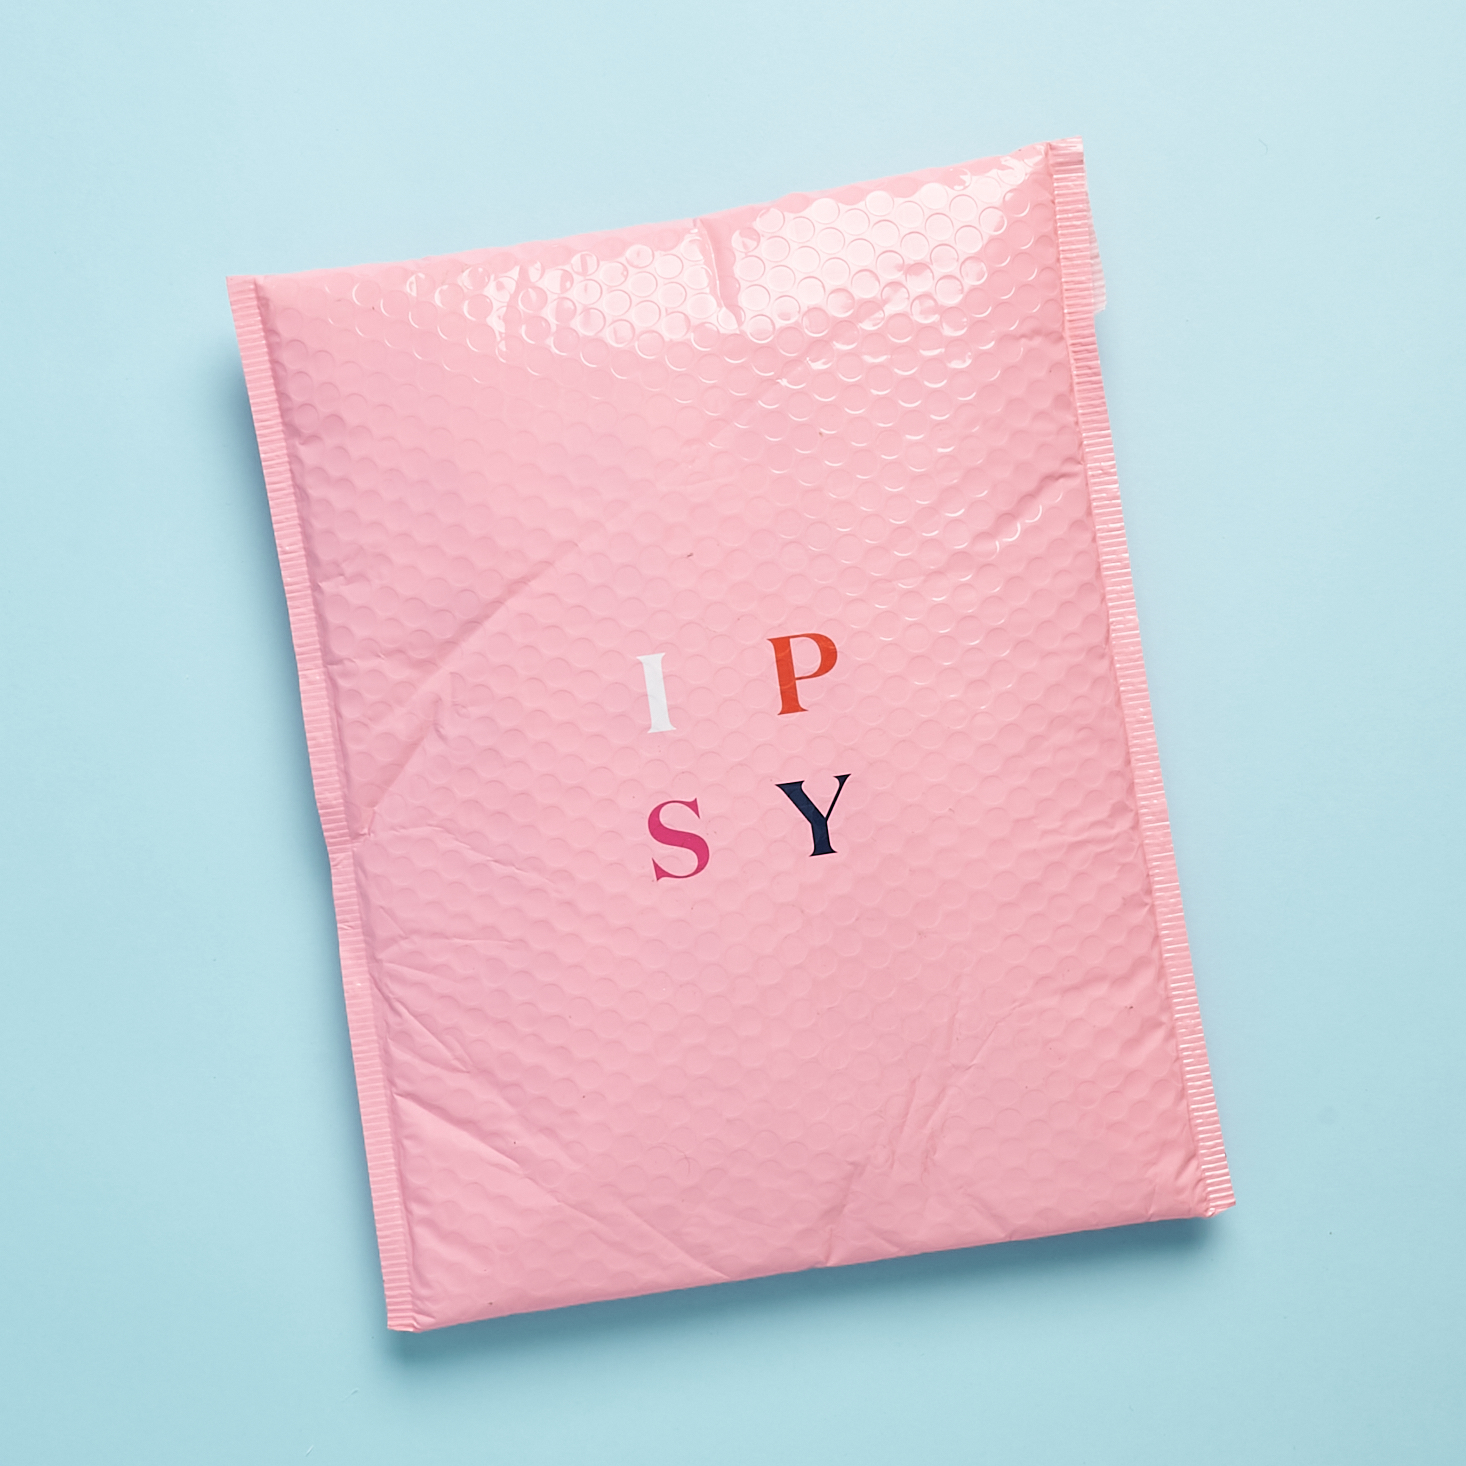 Ipsy Glam Bag + Glam Bag Plus October 2021: See the Bag Designs